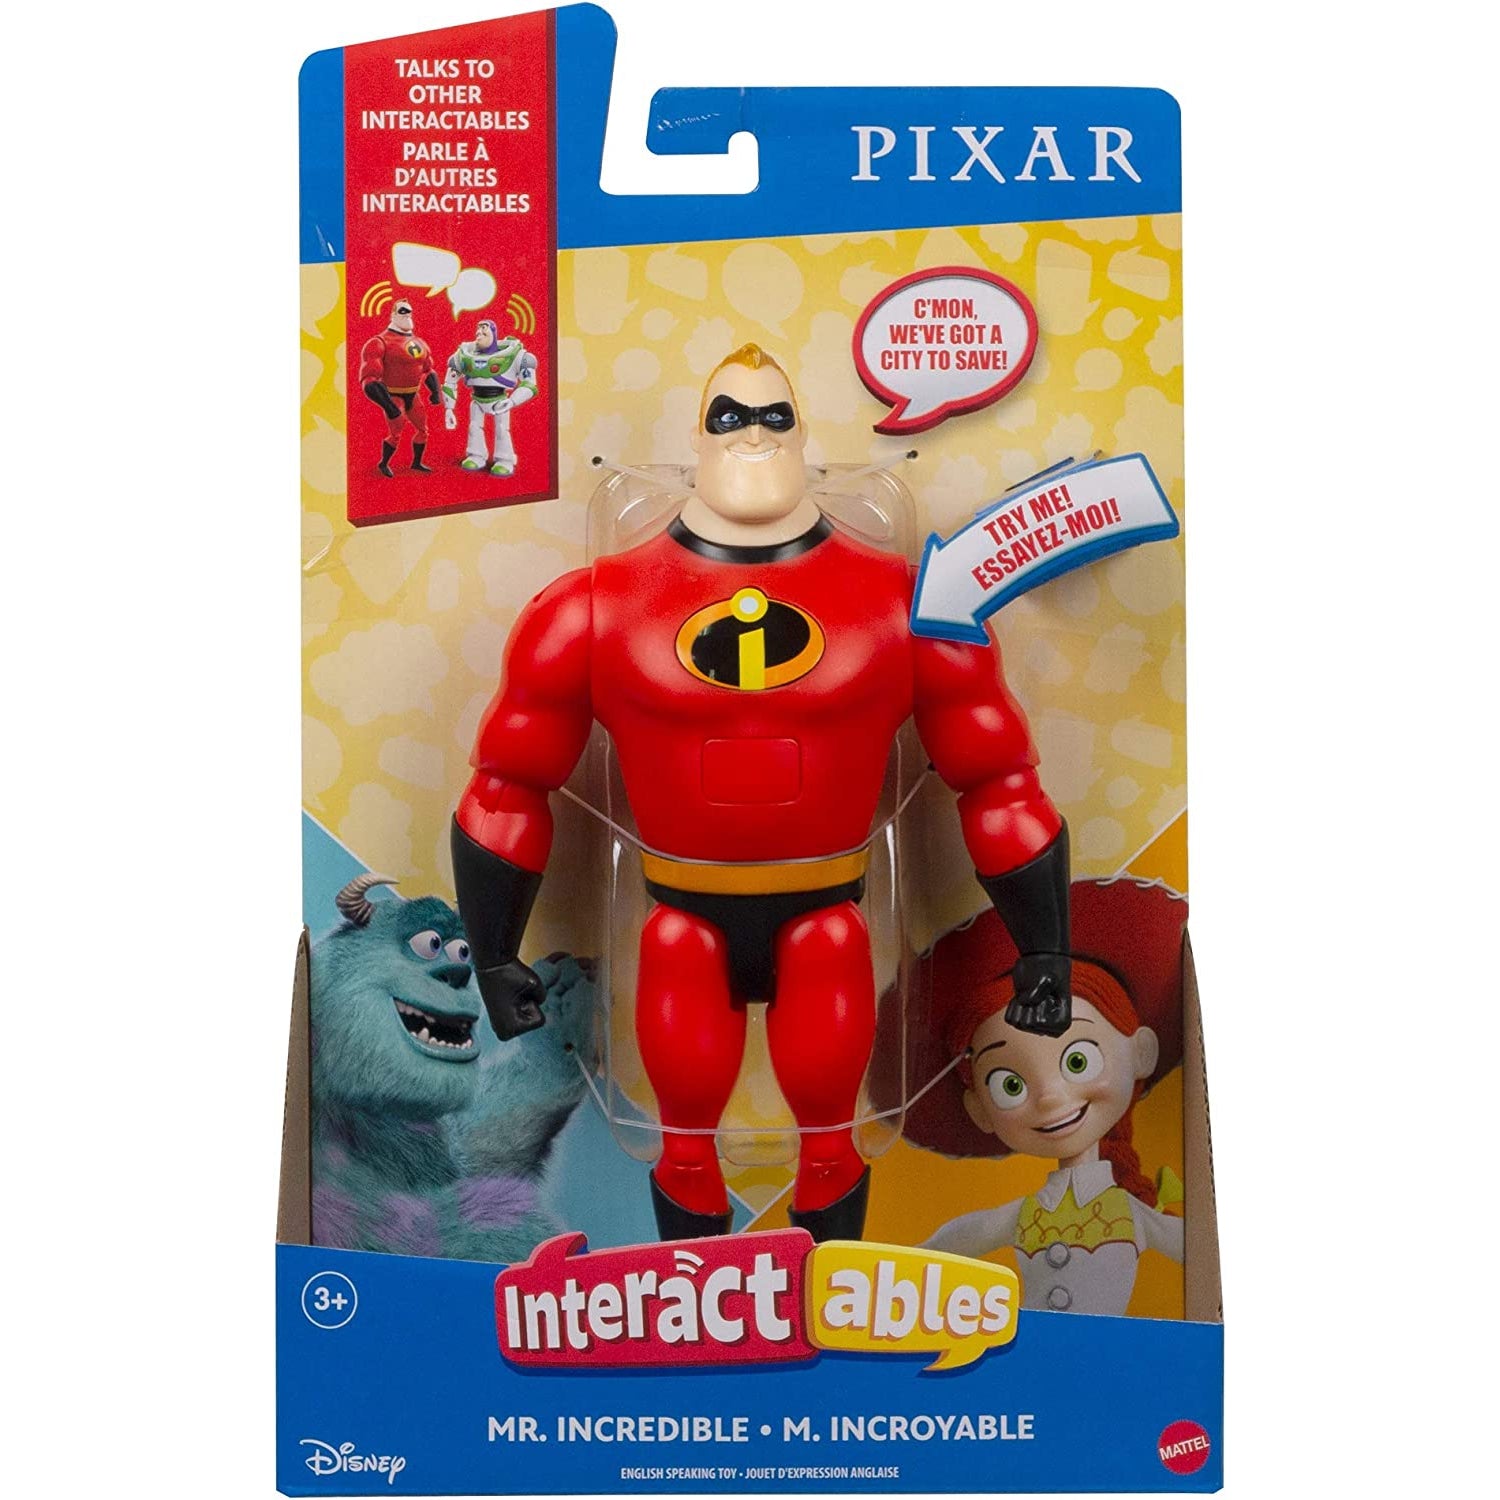 Disney Pixar The Incredibles Interactables - Mr. Incredible Action